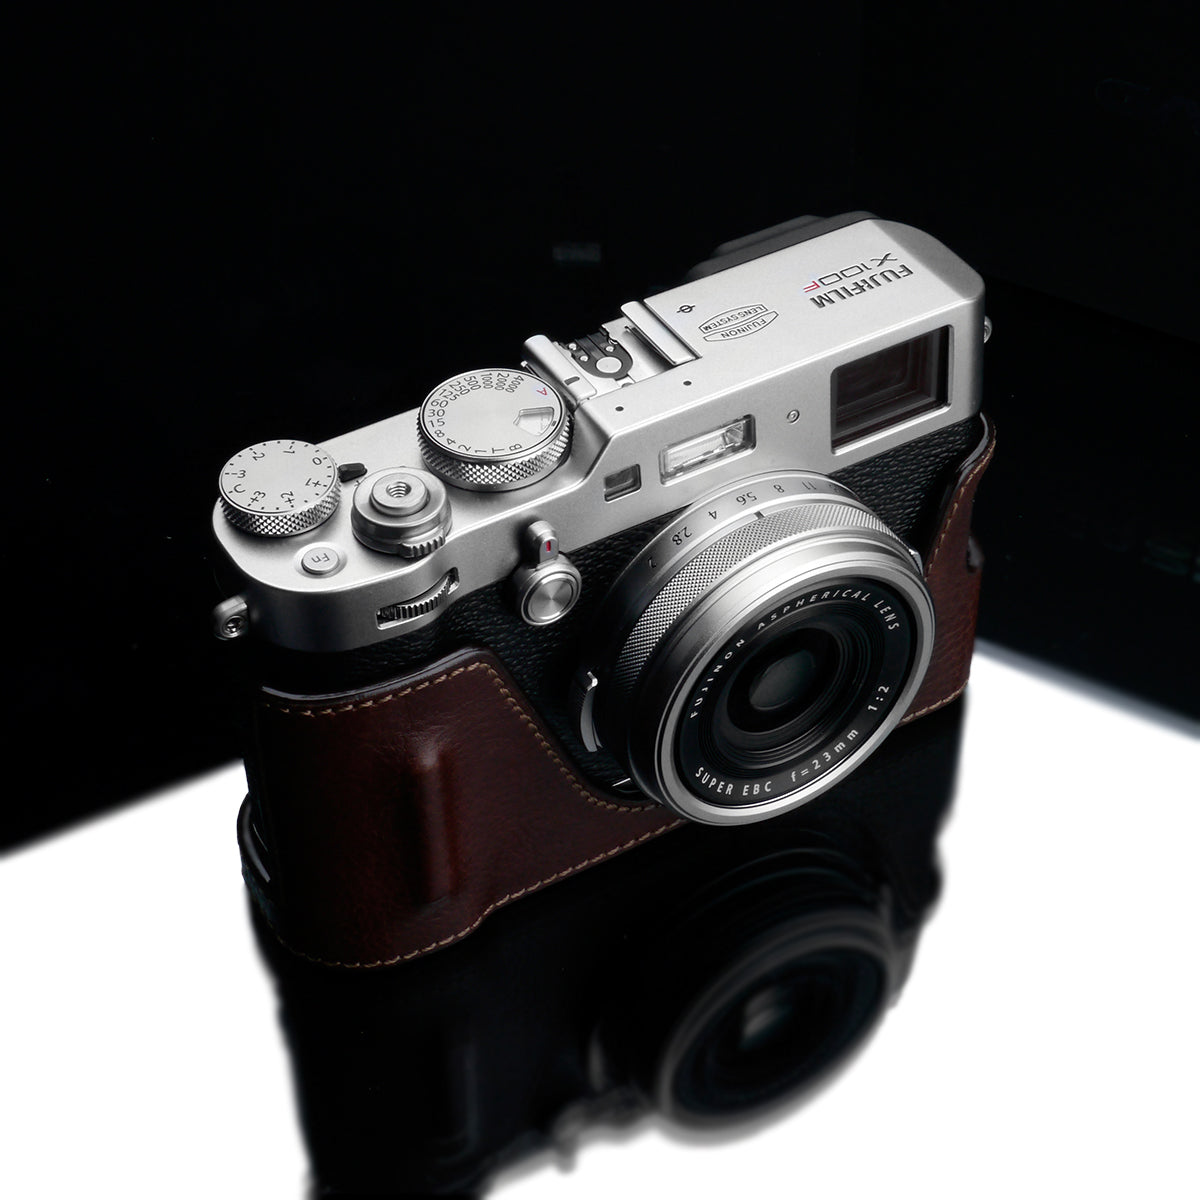 Gariz HG-X100FBR Brown Leather Camera Half Case for Fujifilm Fuji X100F